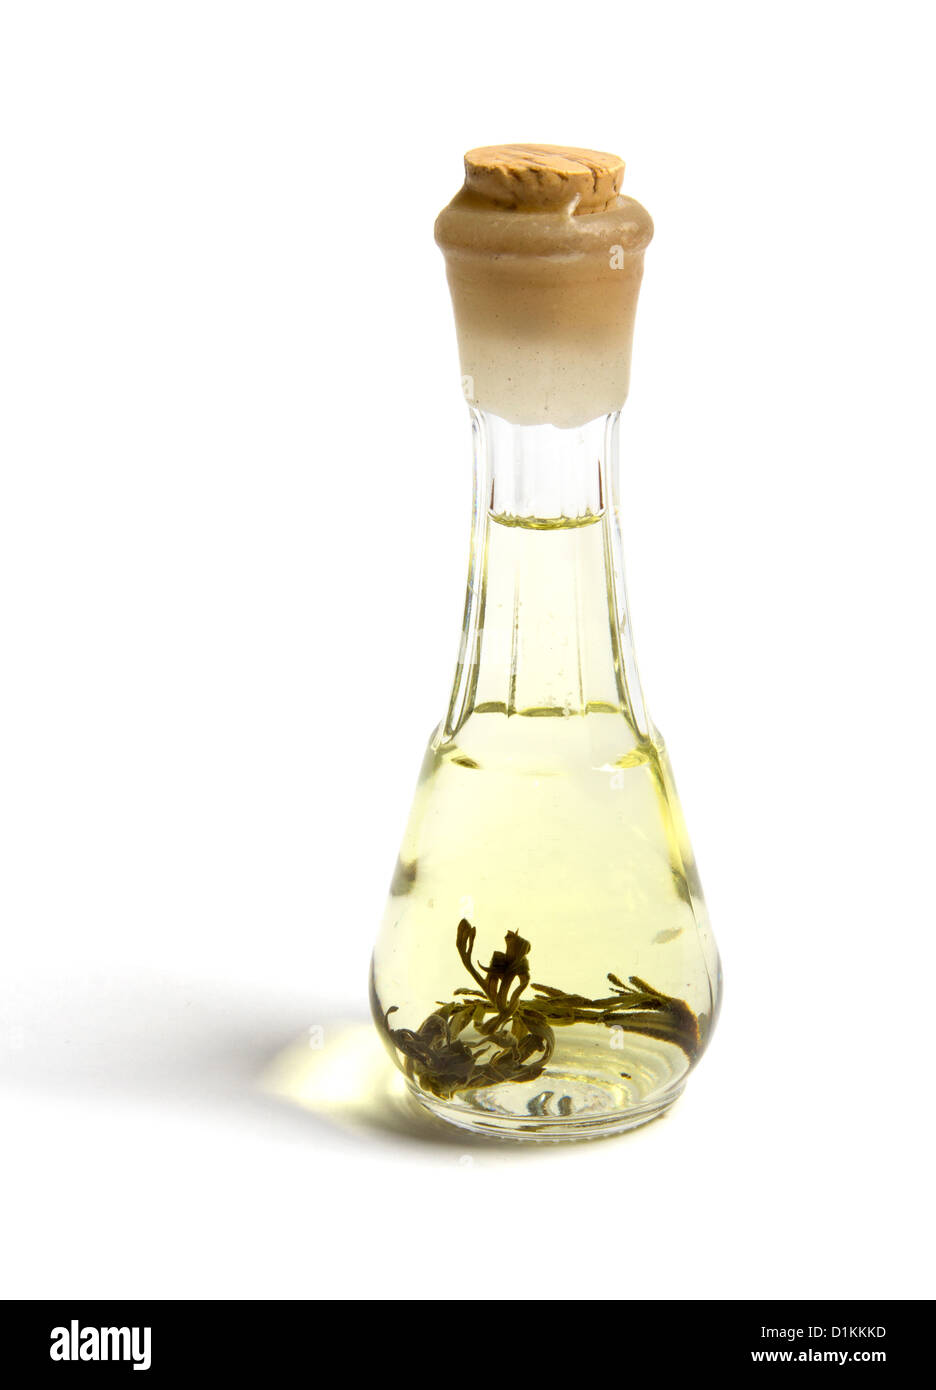 Bottle of potion isolated on white close up Stock Photo